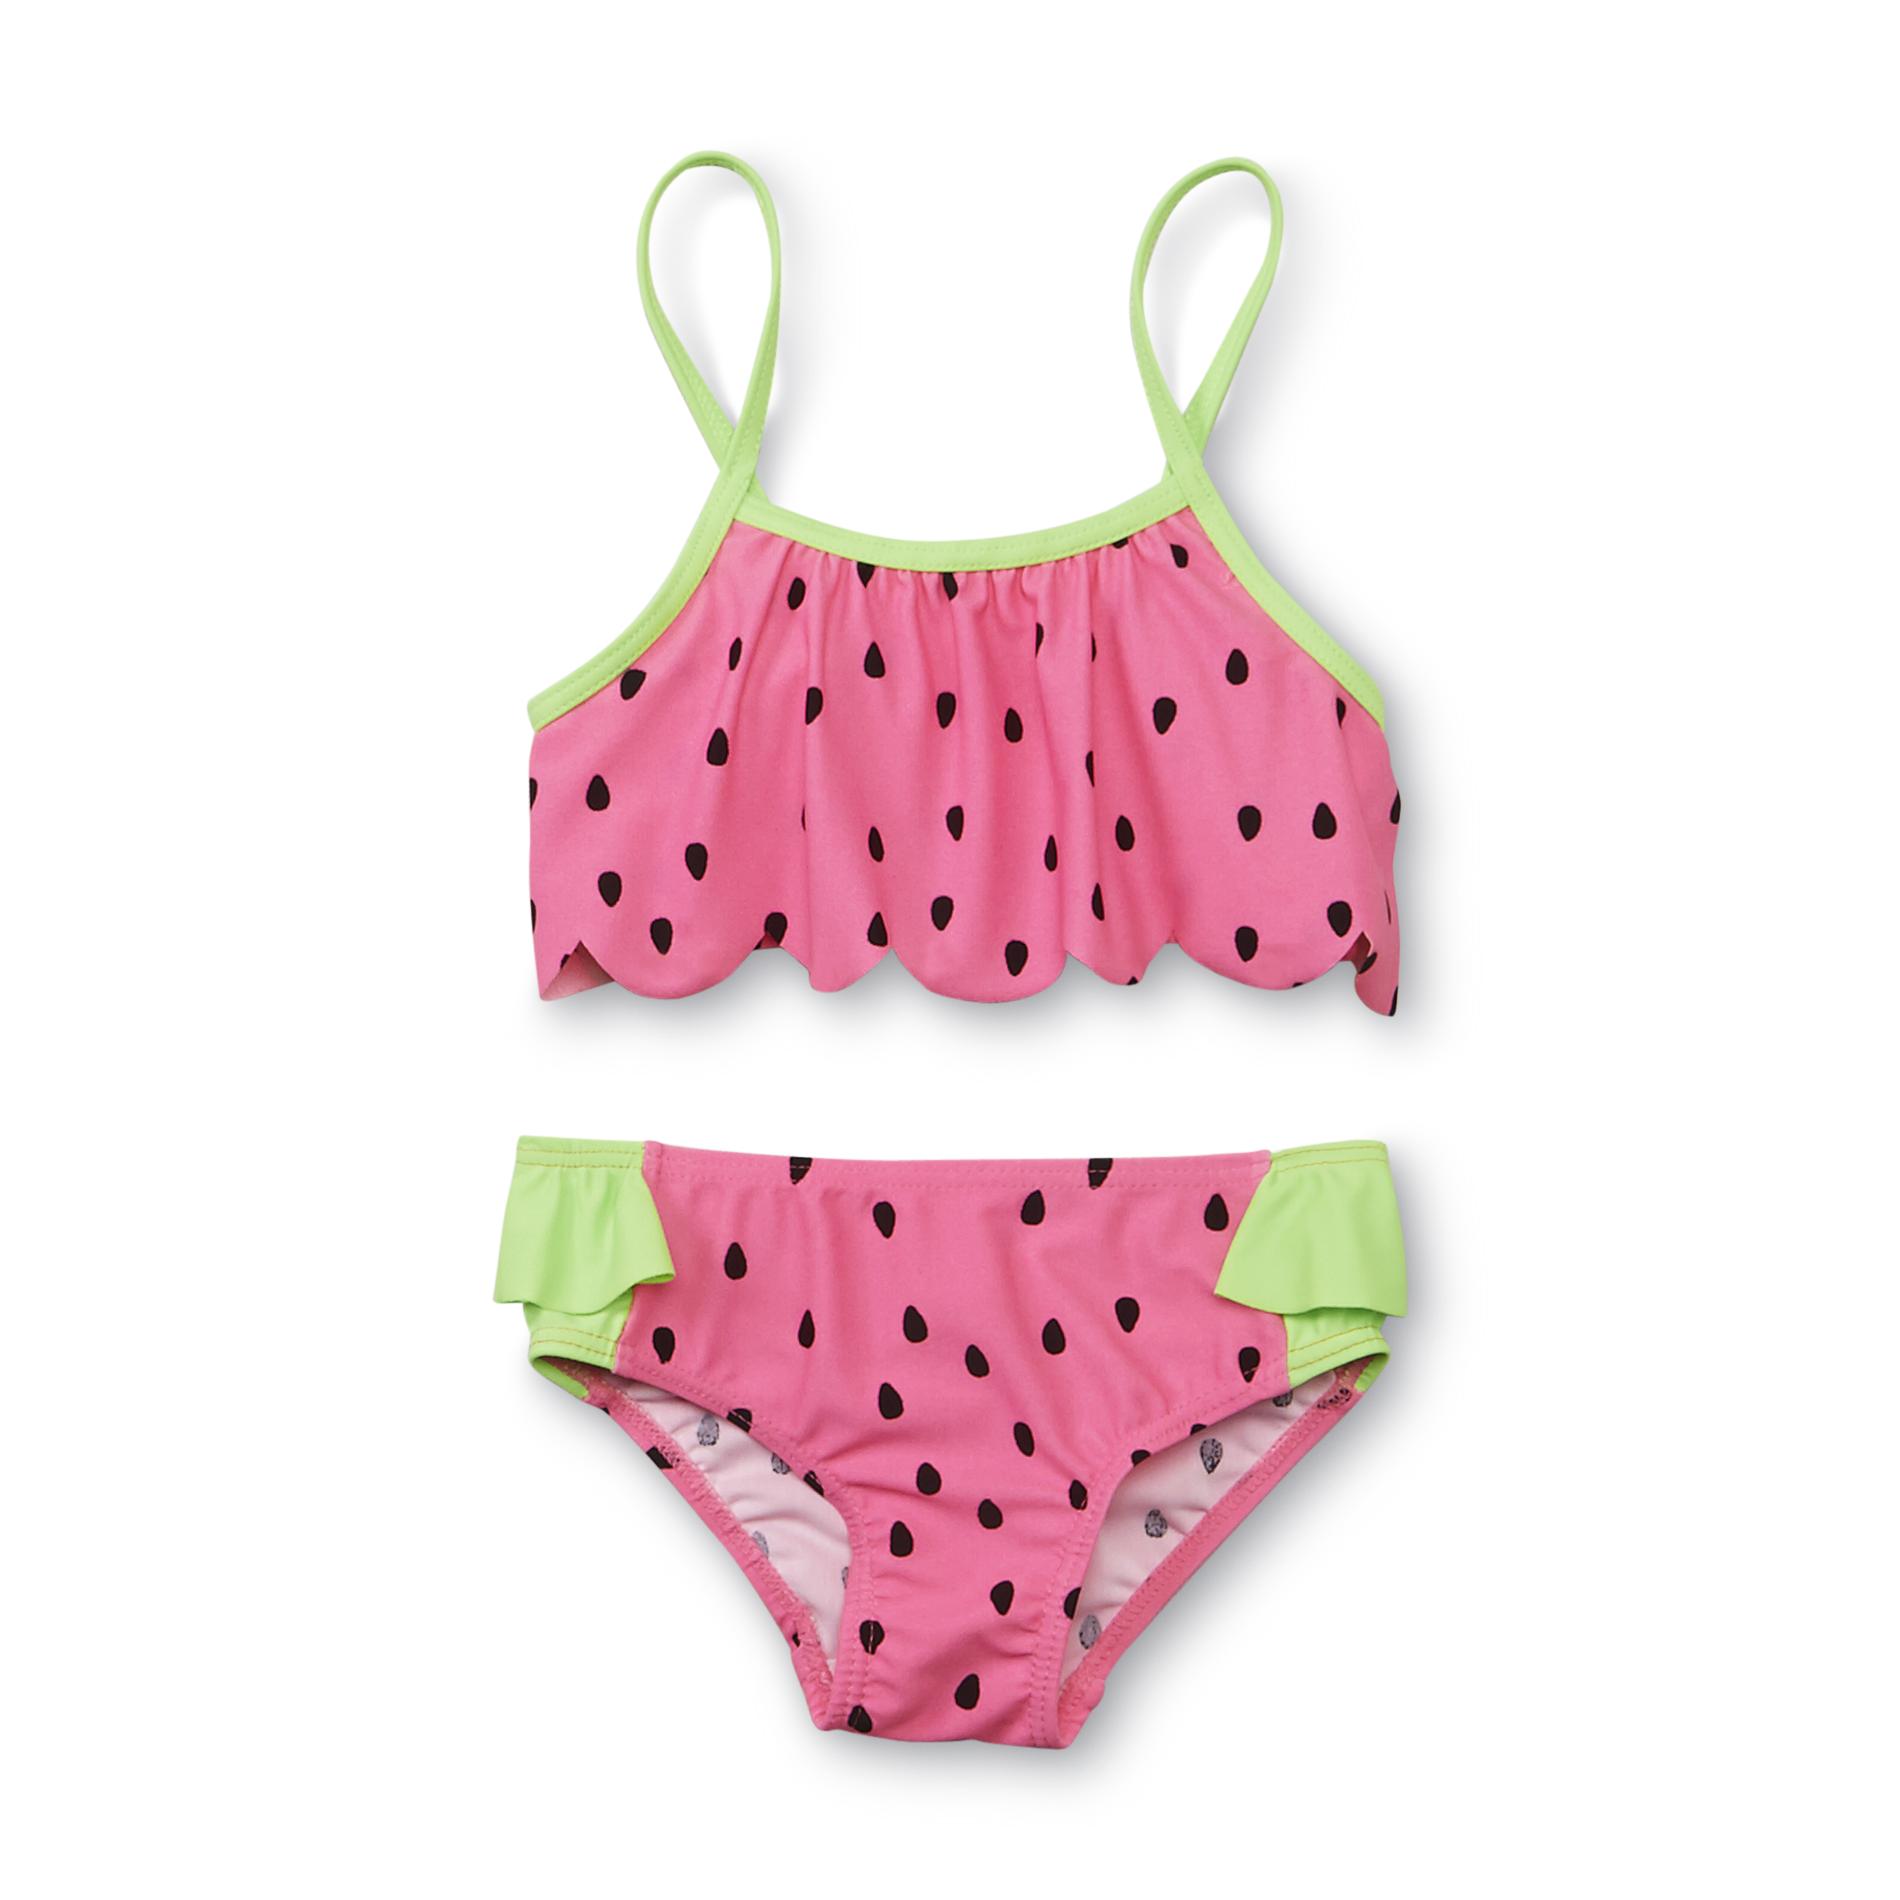 WonderKids Infant & Toddler Girl's Bikini Top & Bottoms Swimsuit - Watermelon